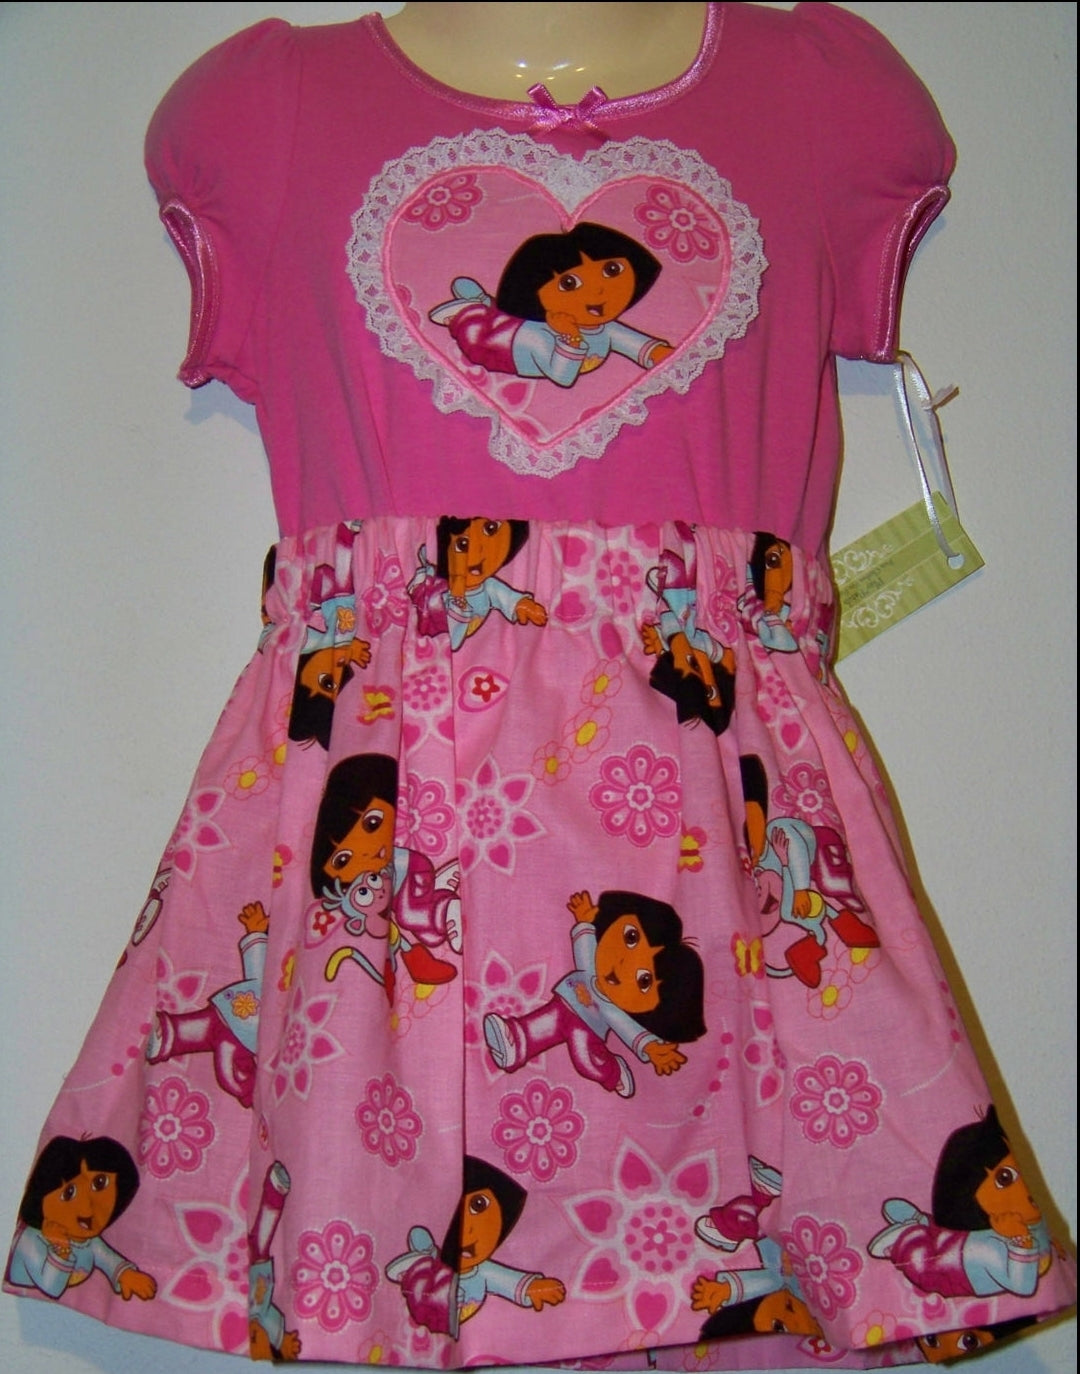 Dora size 24m Two Piece Skirt Set.